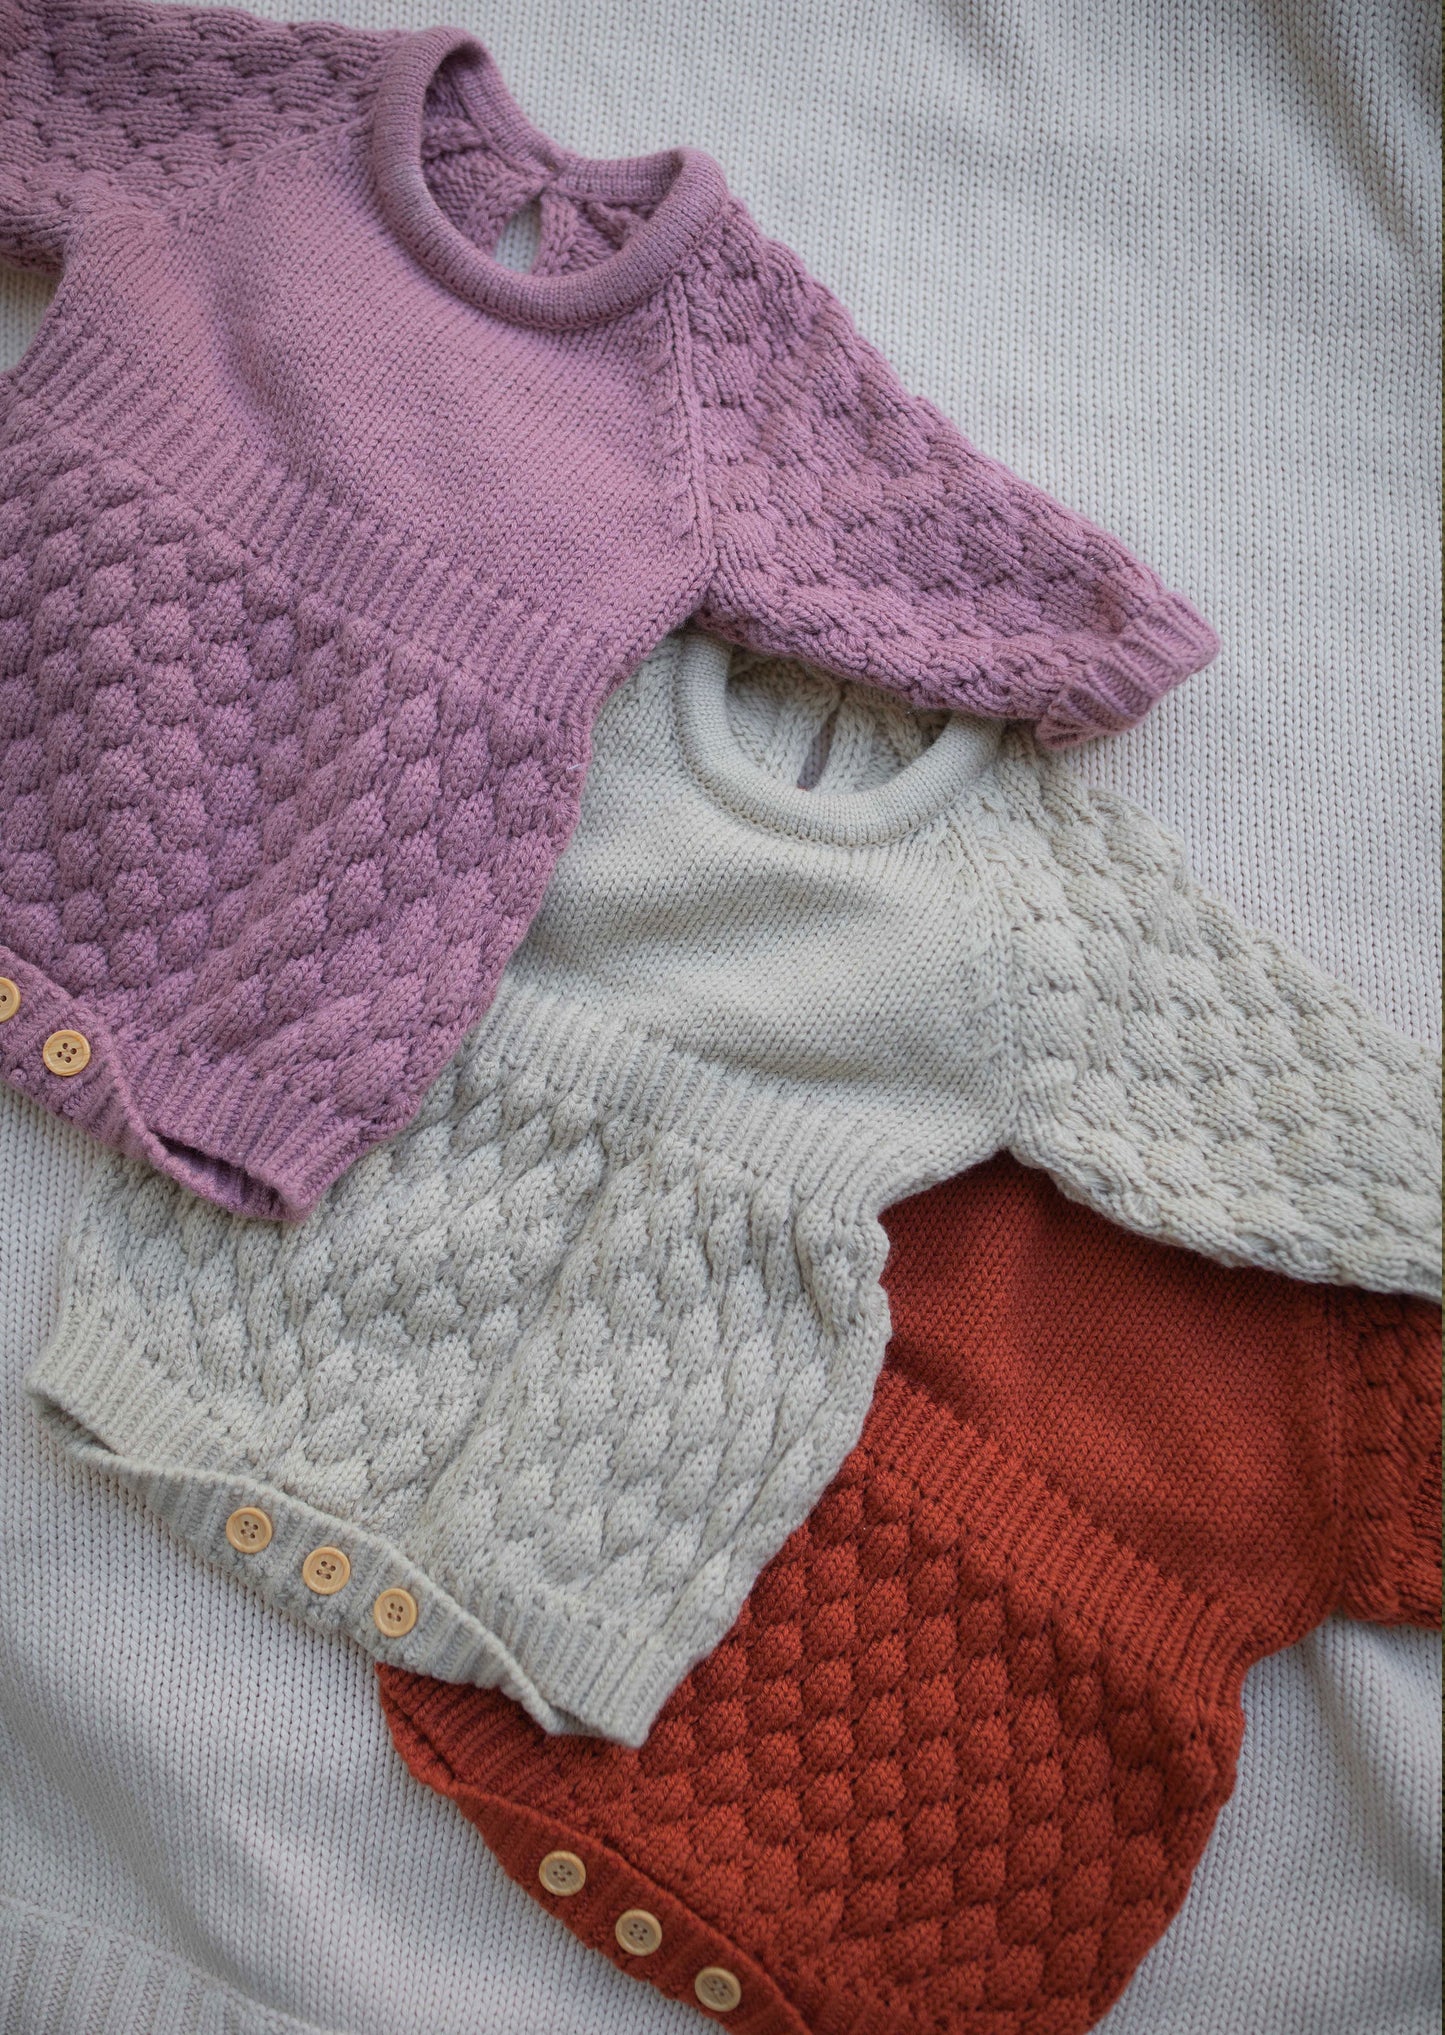 Knit Sweater - Pink